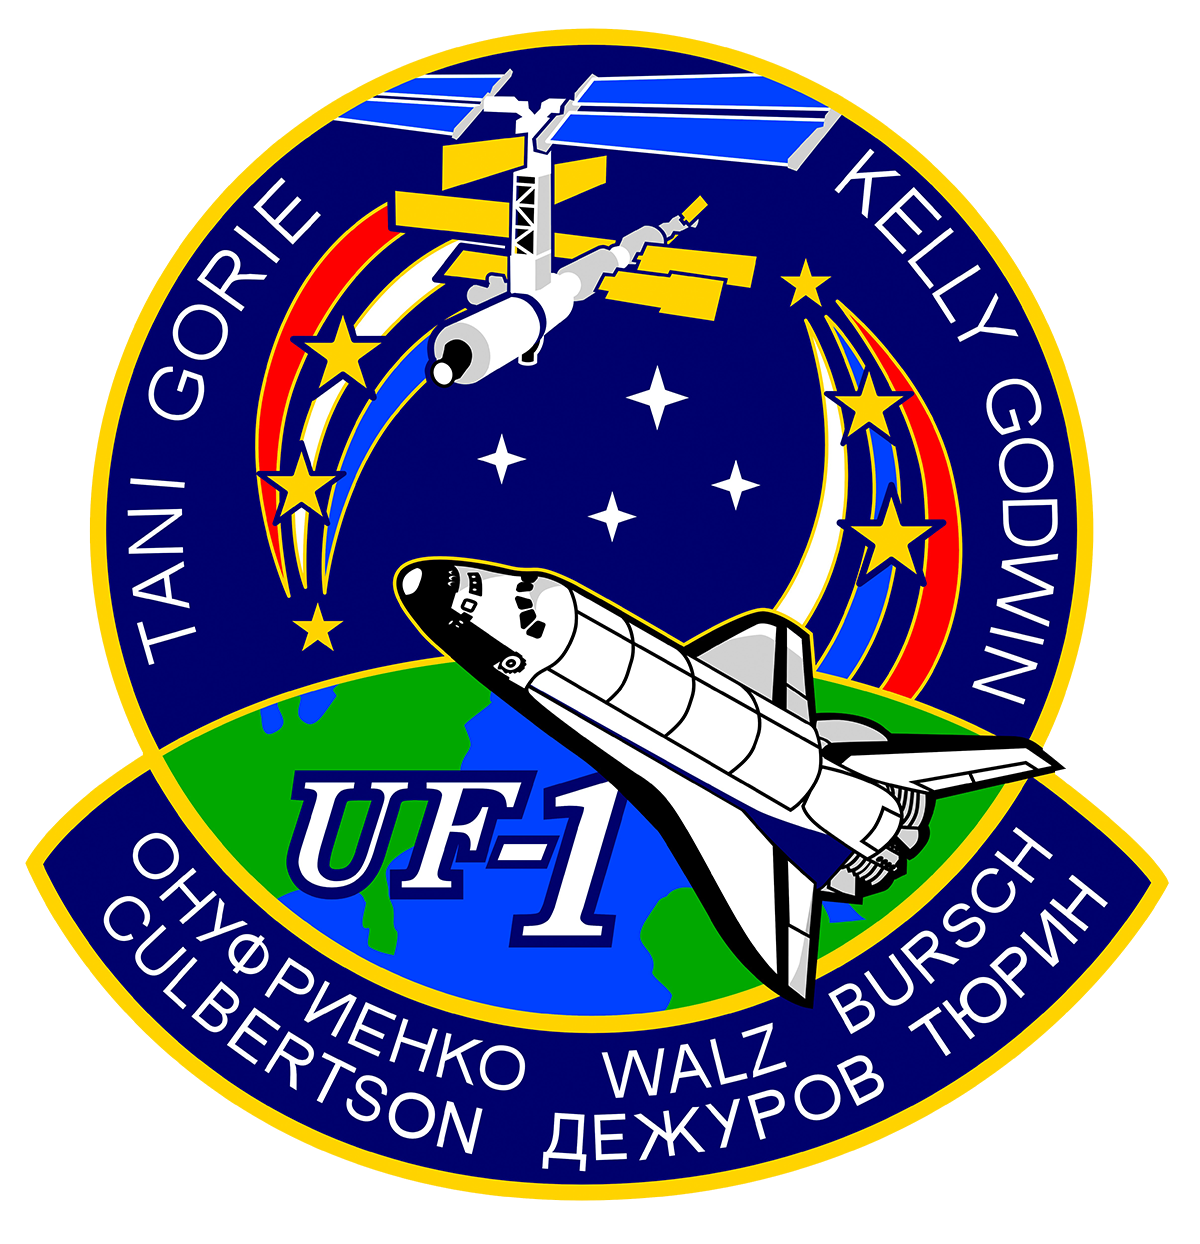 STS-108 (Endeavour)